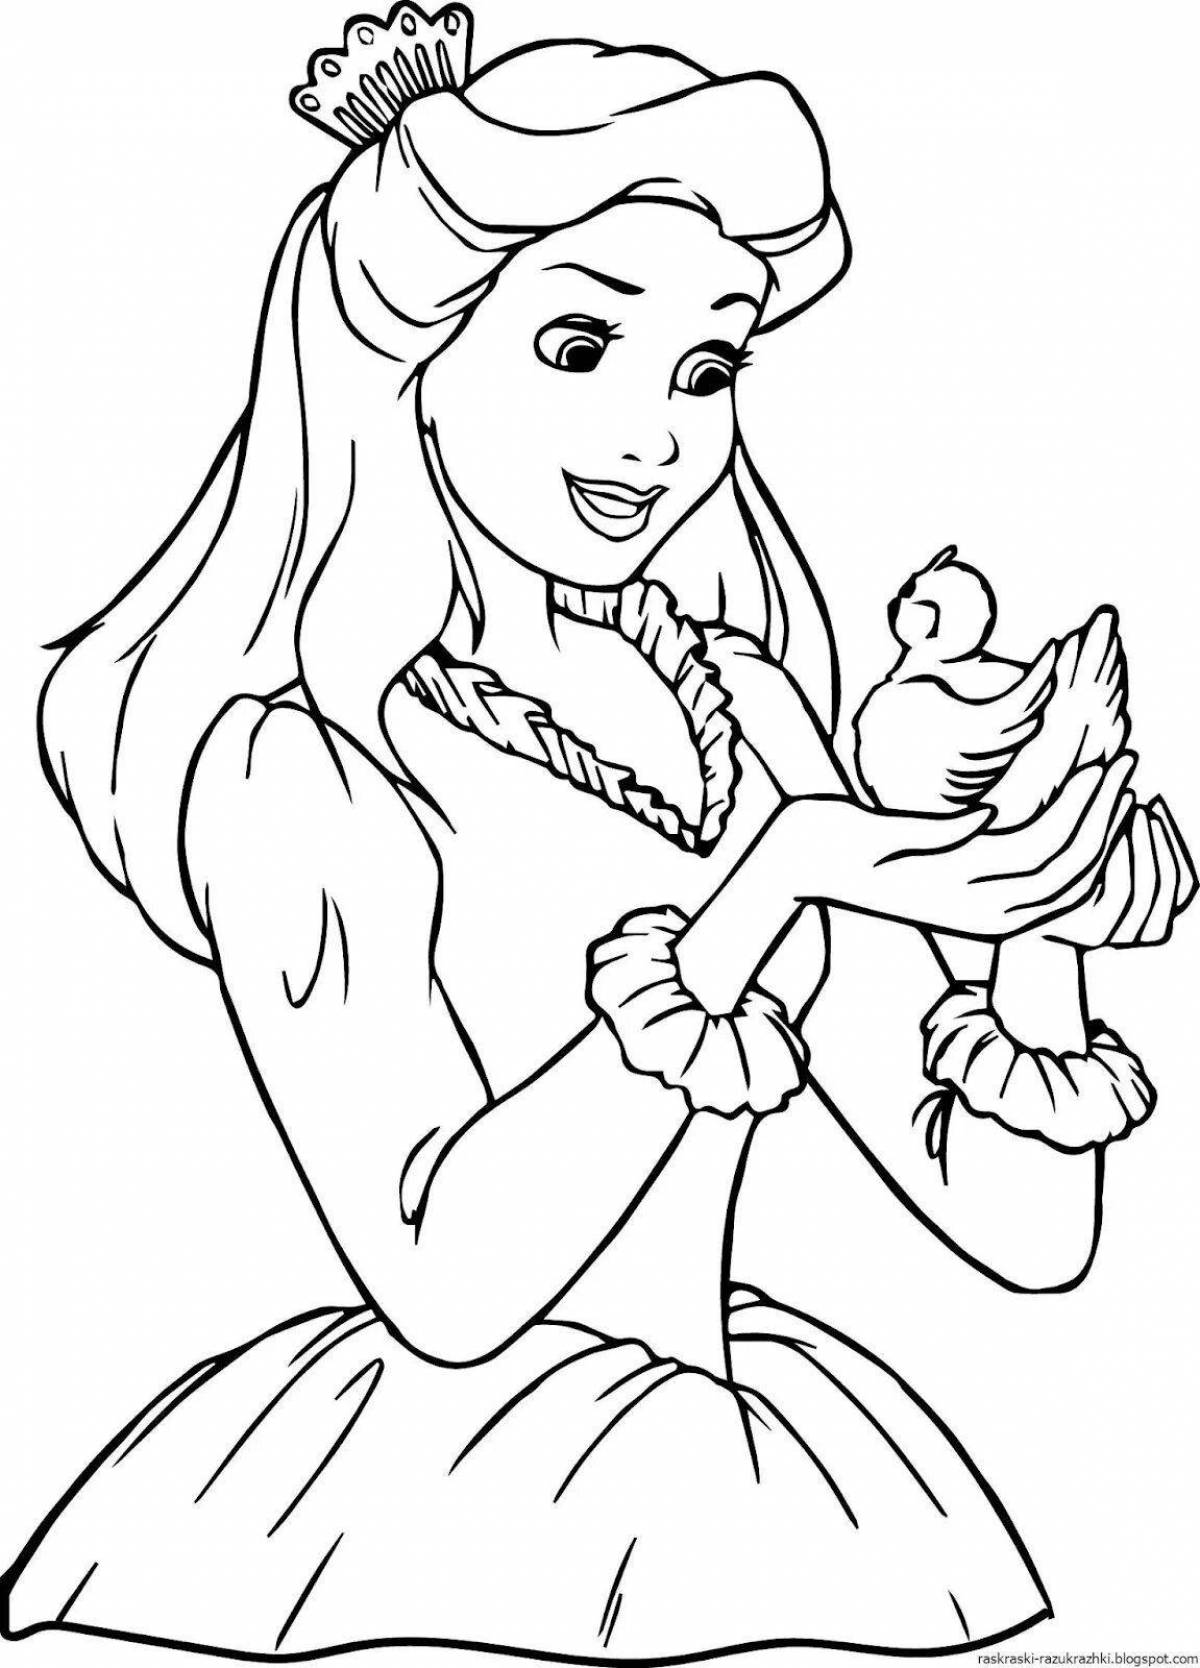 Little princess coloring pages